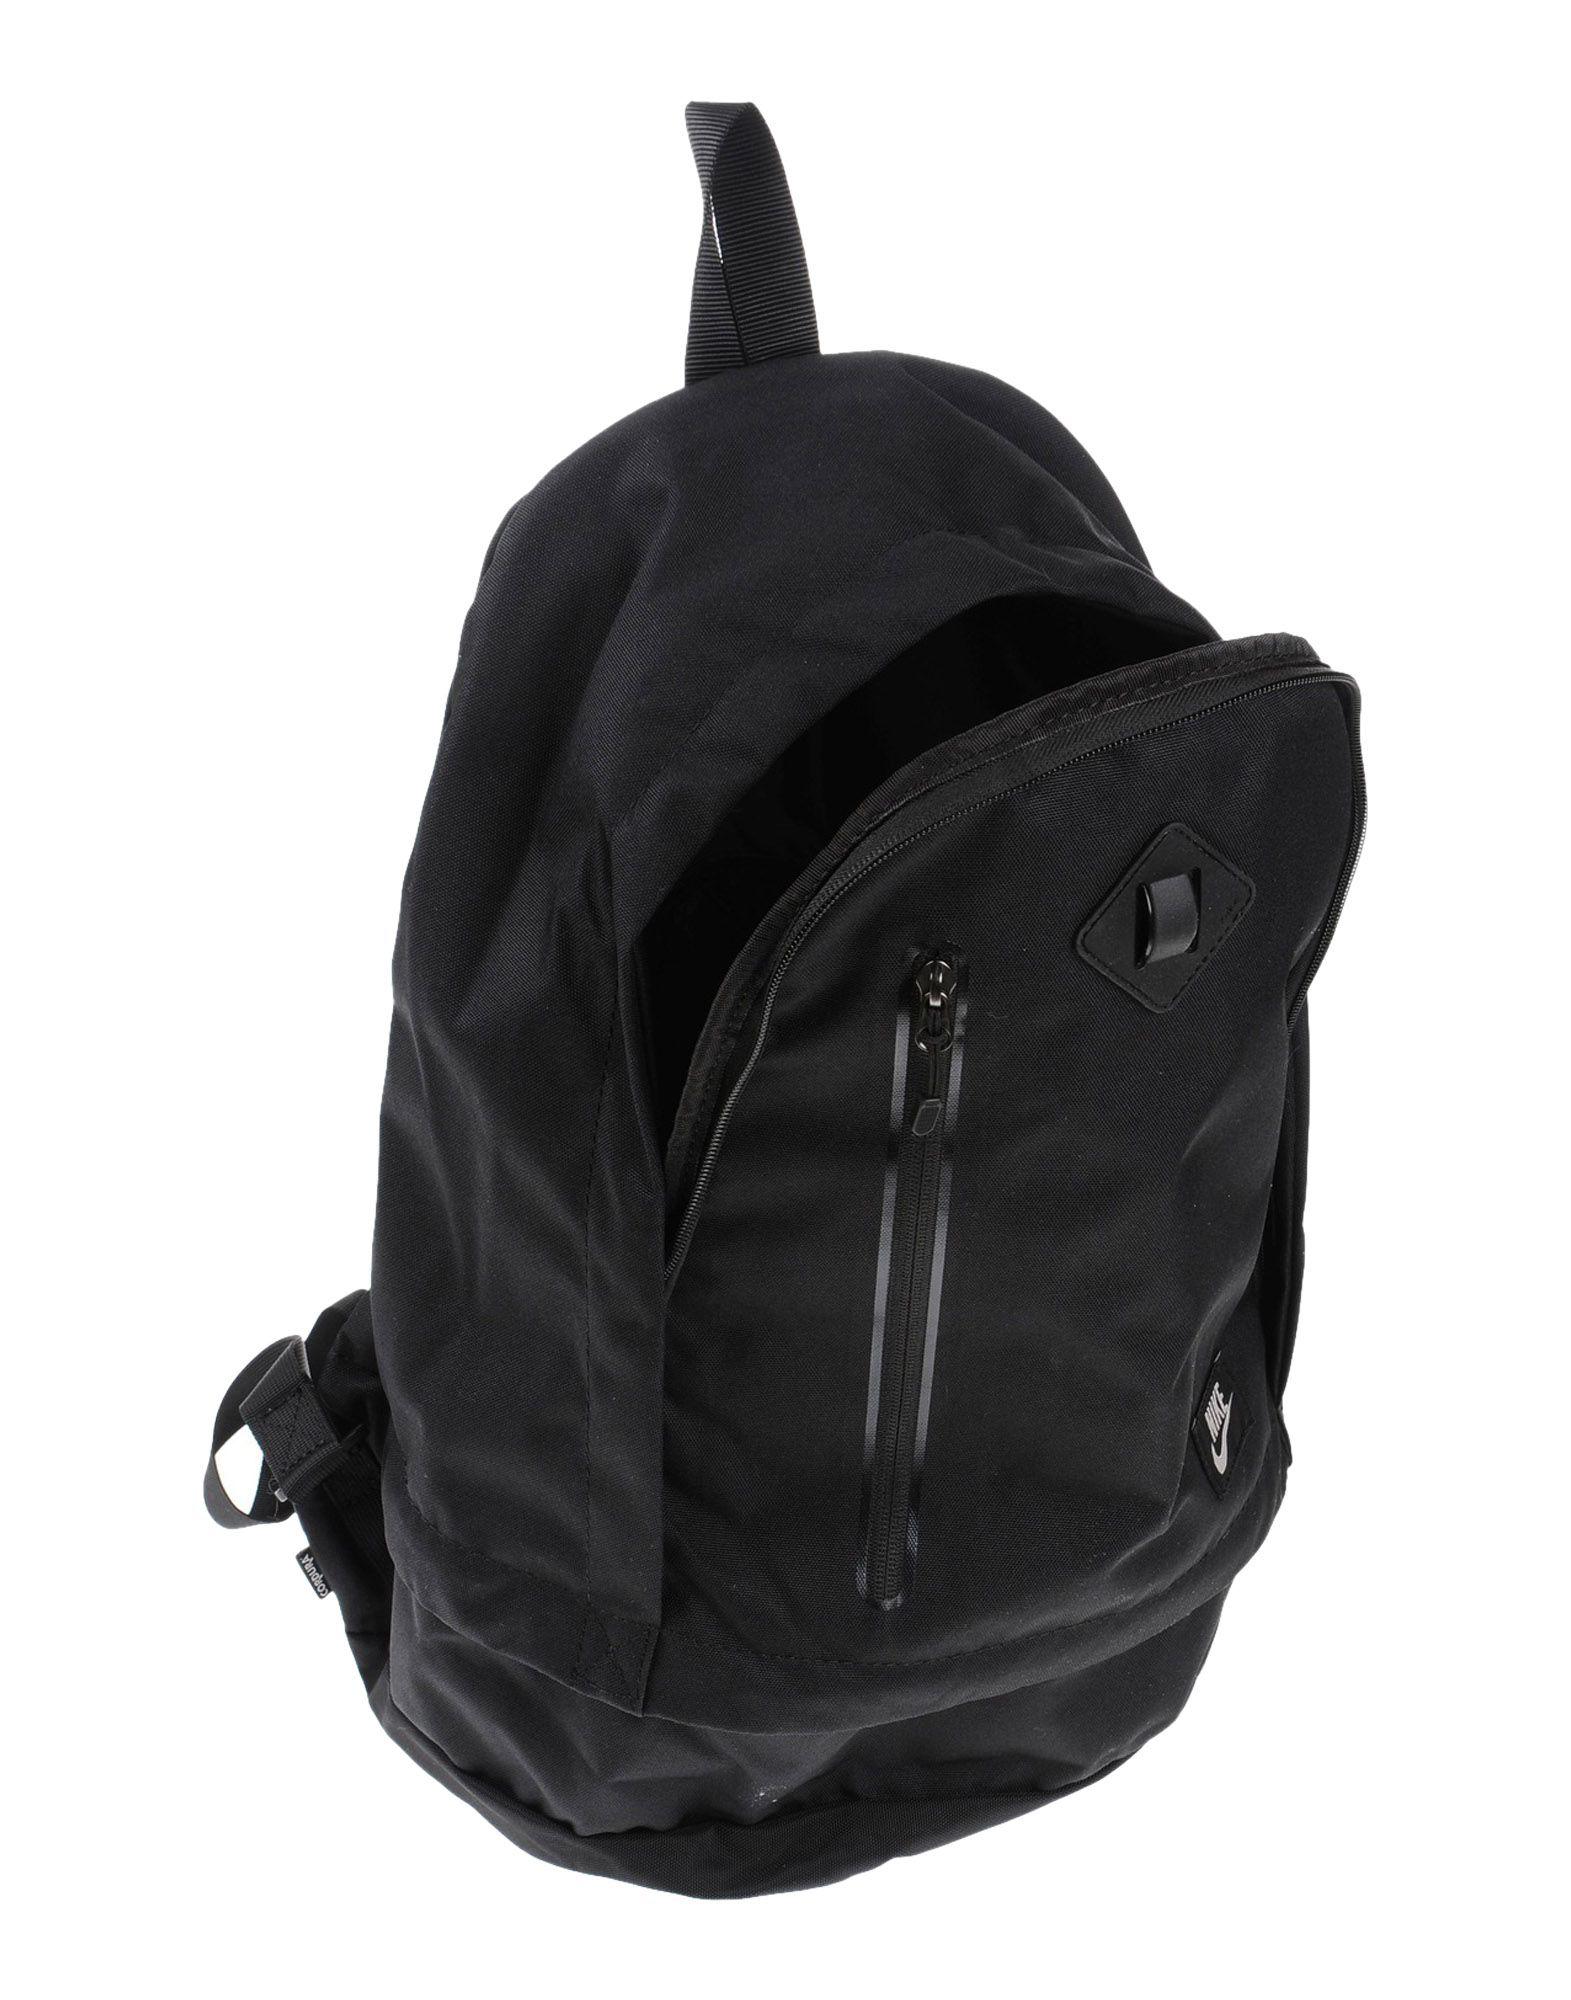 Nike Synthetic Backpacks & Bum Bags in Black for Men - Lyst